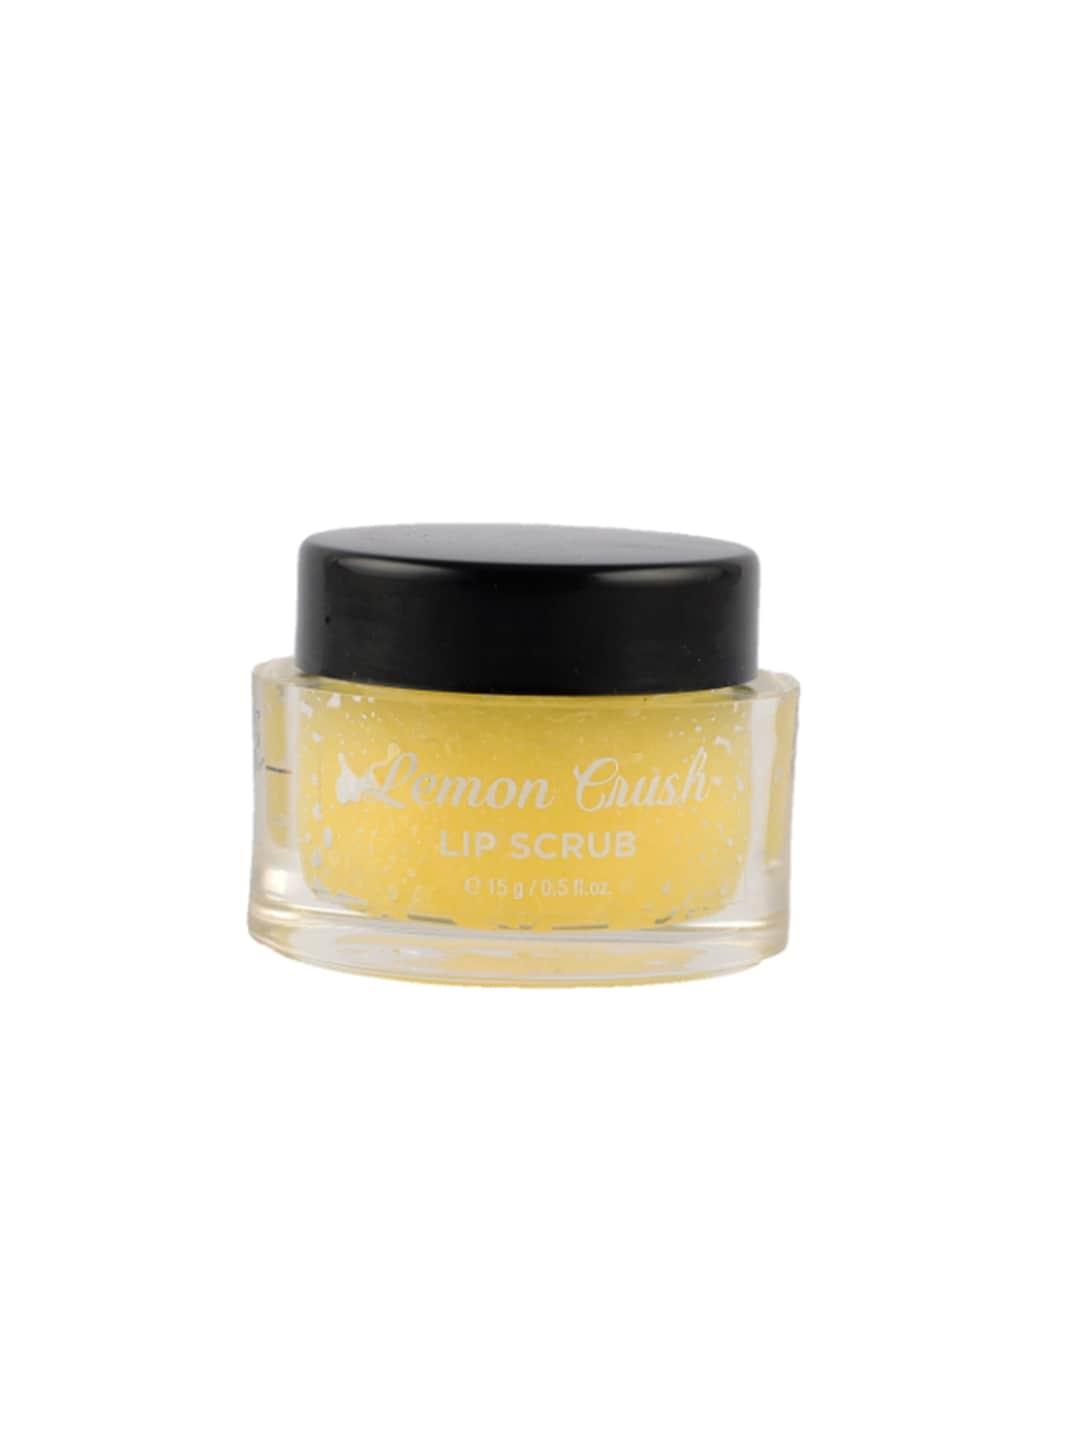 ANOUR Lemon Crush Lip Scrub with Jojoba Oil & Shea Butter for Soft & Smooth Lips - 15g